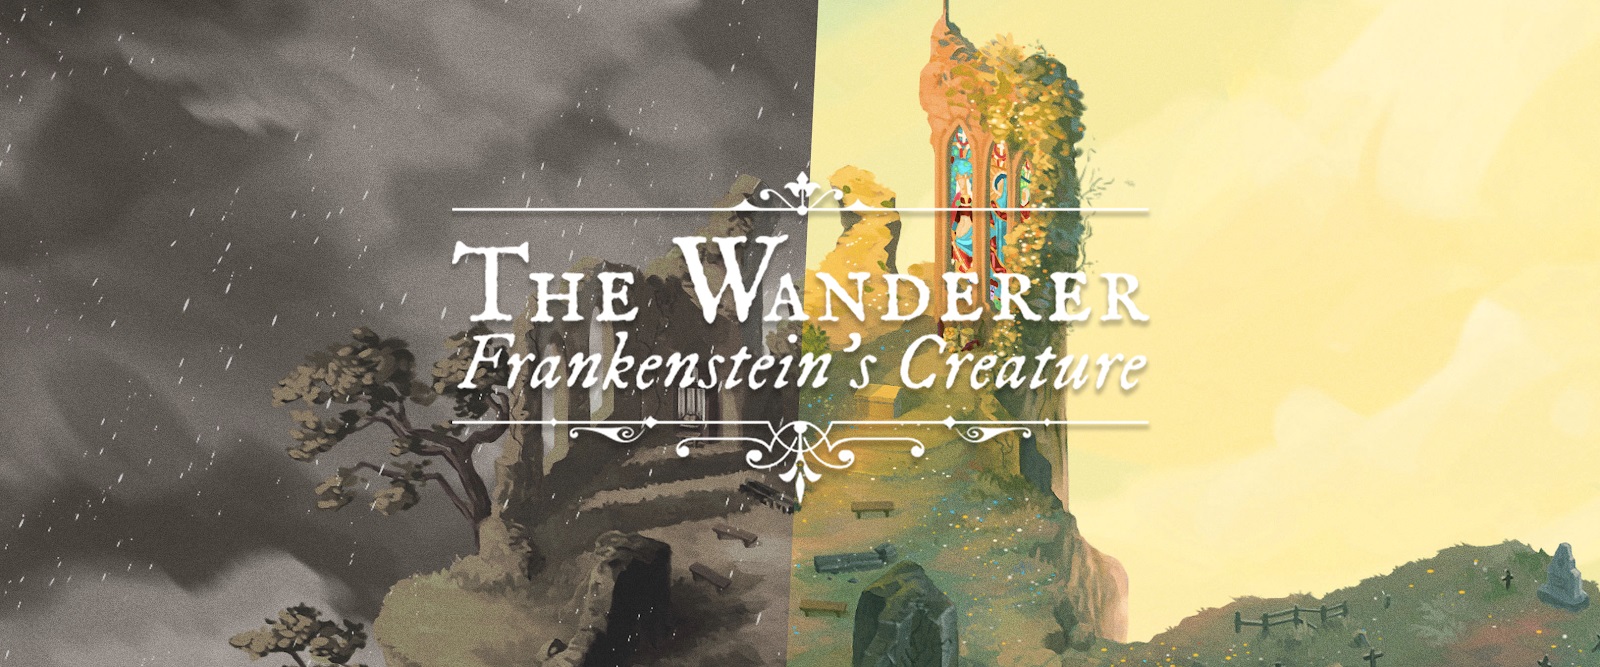 The Wanderer Frankenstein's creature